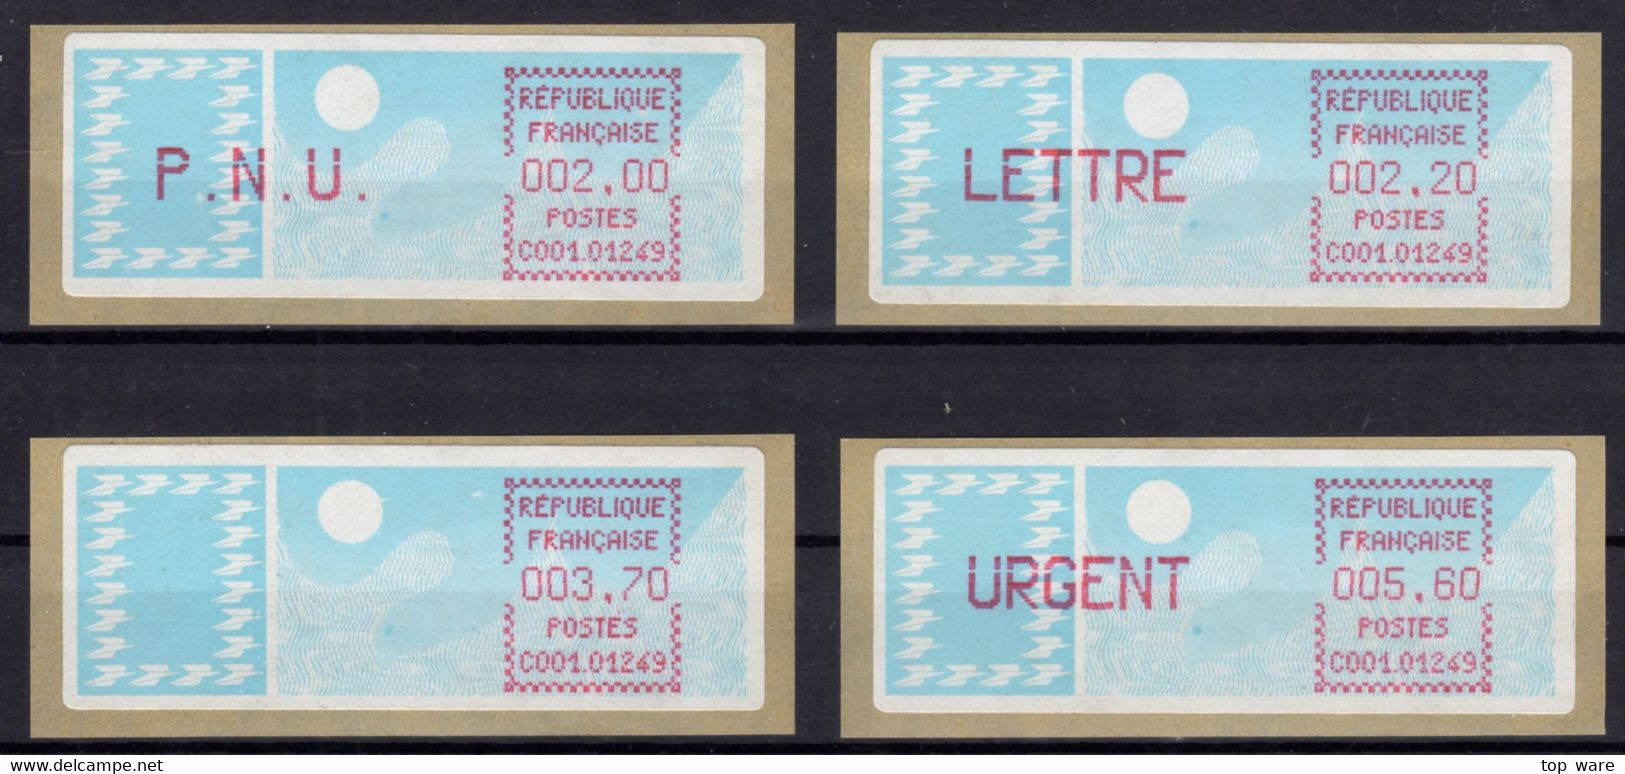 France ATM Stamps C001.01249 Michel 6.3 Zd Series ZS4 Neuf / MNH / Crouzet LSA Distributeurs Automatenmarken Frama Lisa - 1985 Carta « Carrier »